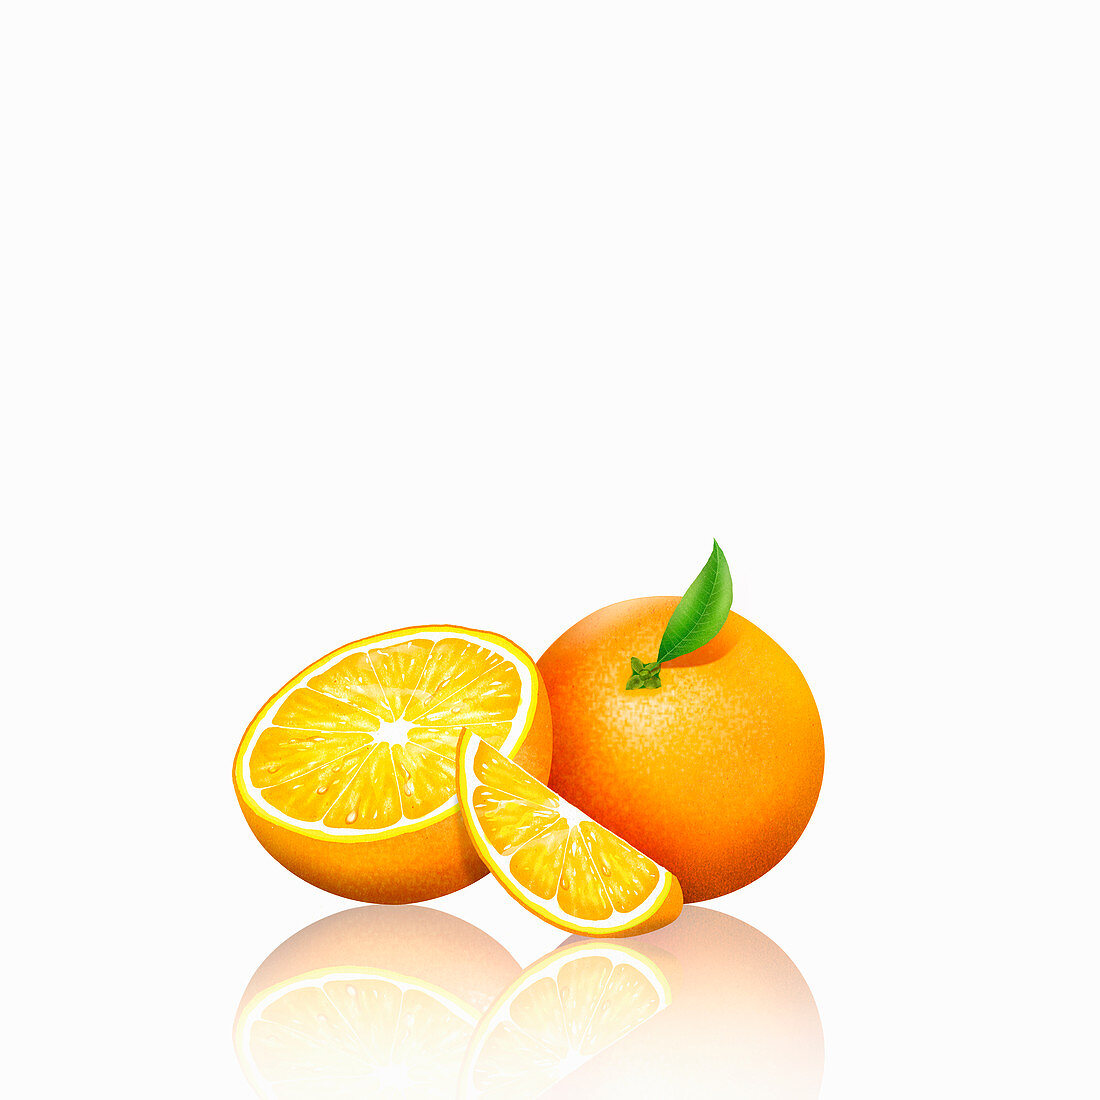 Fresh oranges, whole, half and slice, illustration